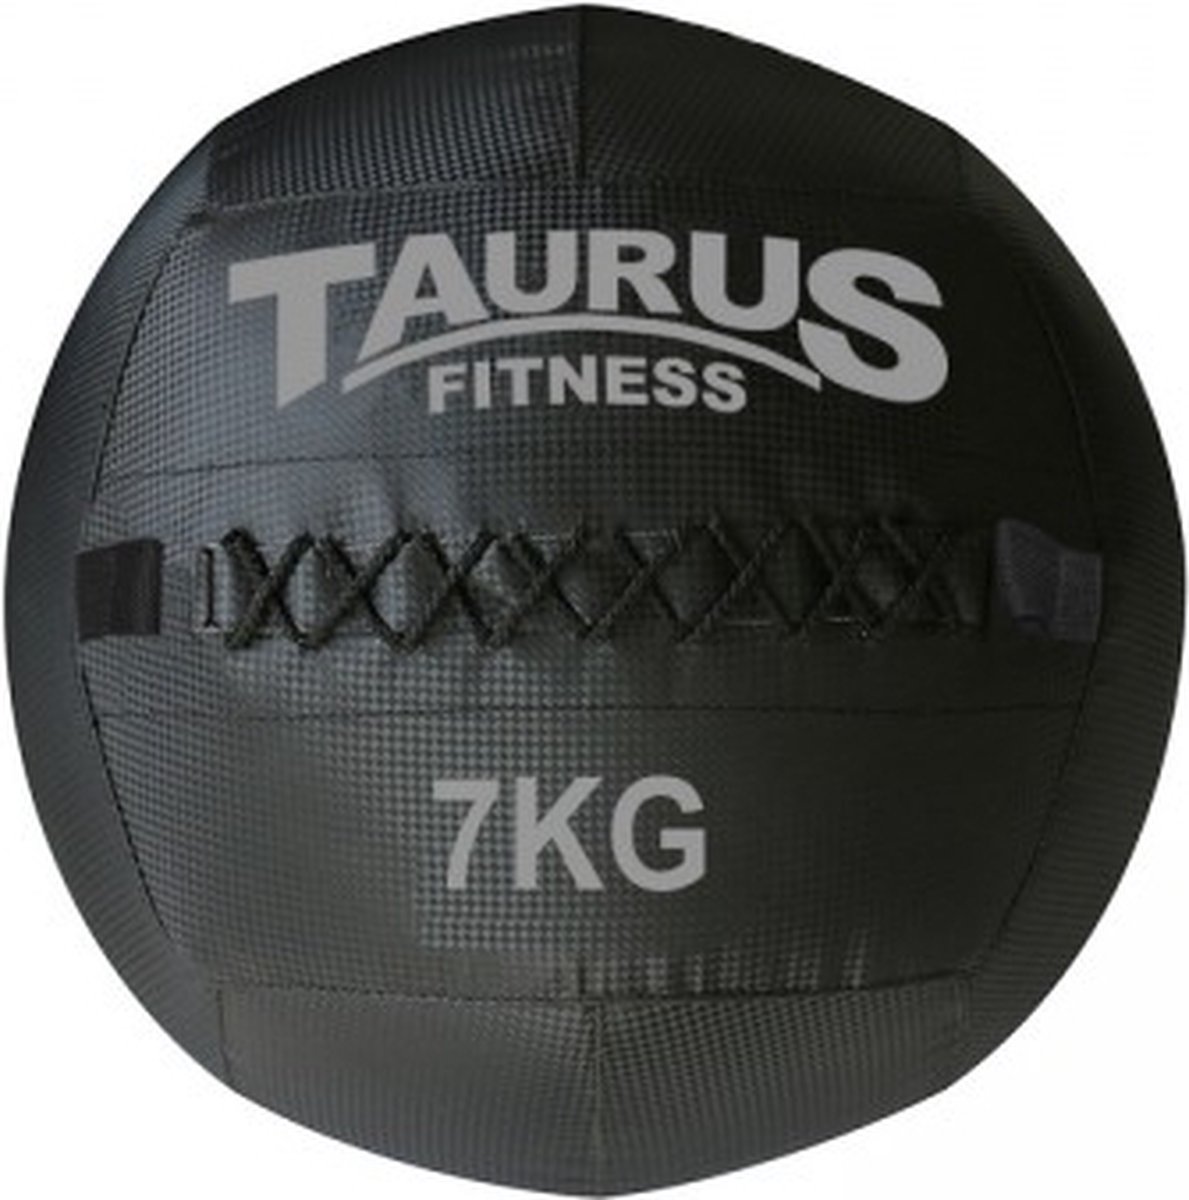 Taurus Wall Ball 7kg – 35cm diameter – crossfit – muurbal – kunstleder – anti slip – functional training – stuitert – coördinatietraining